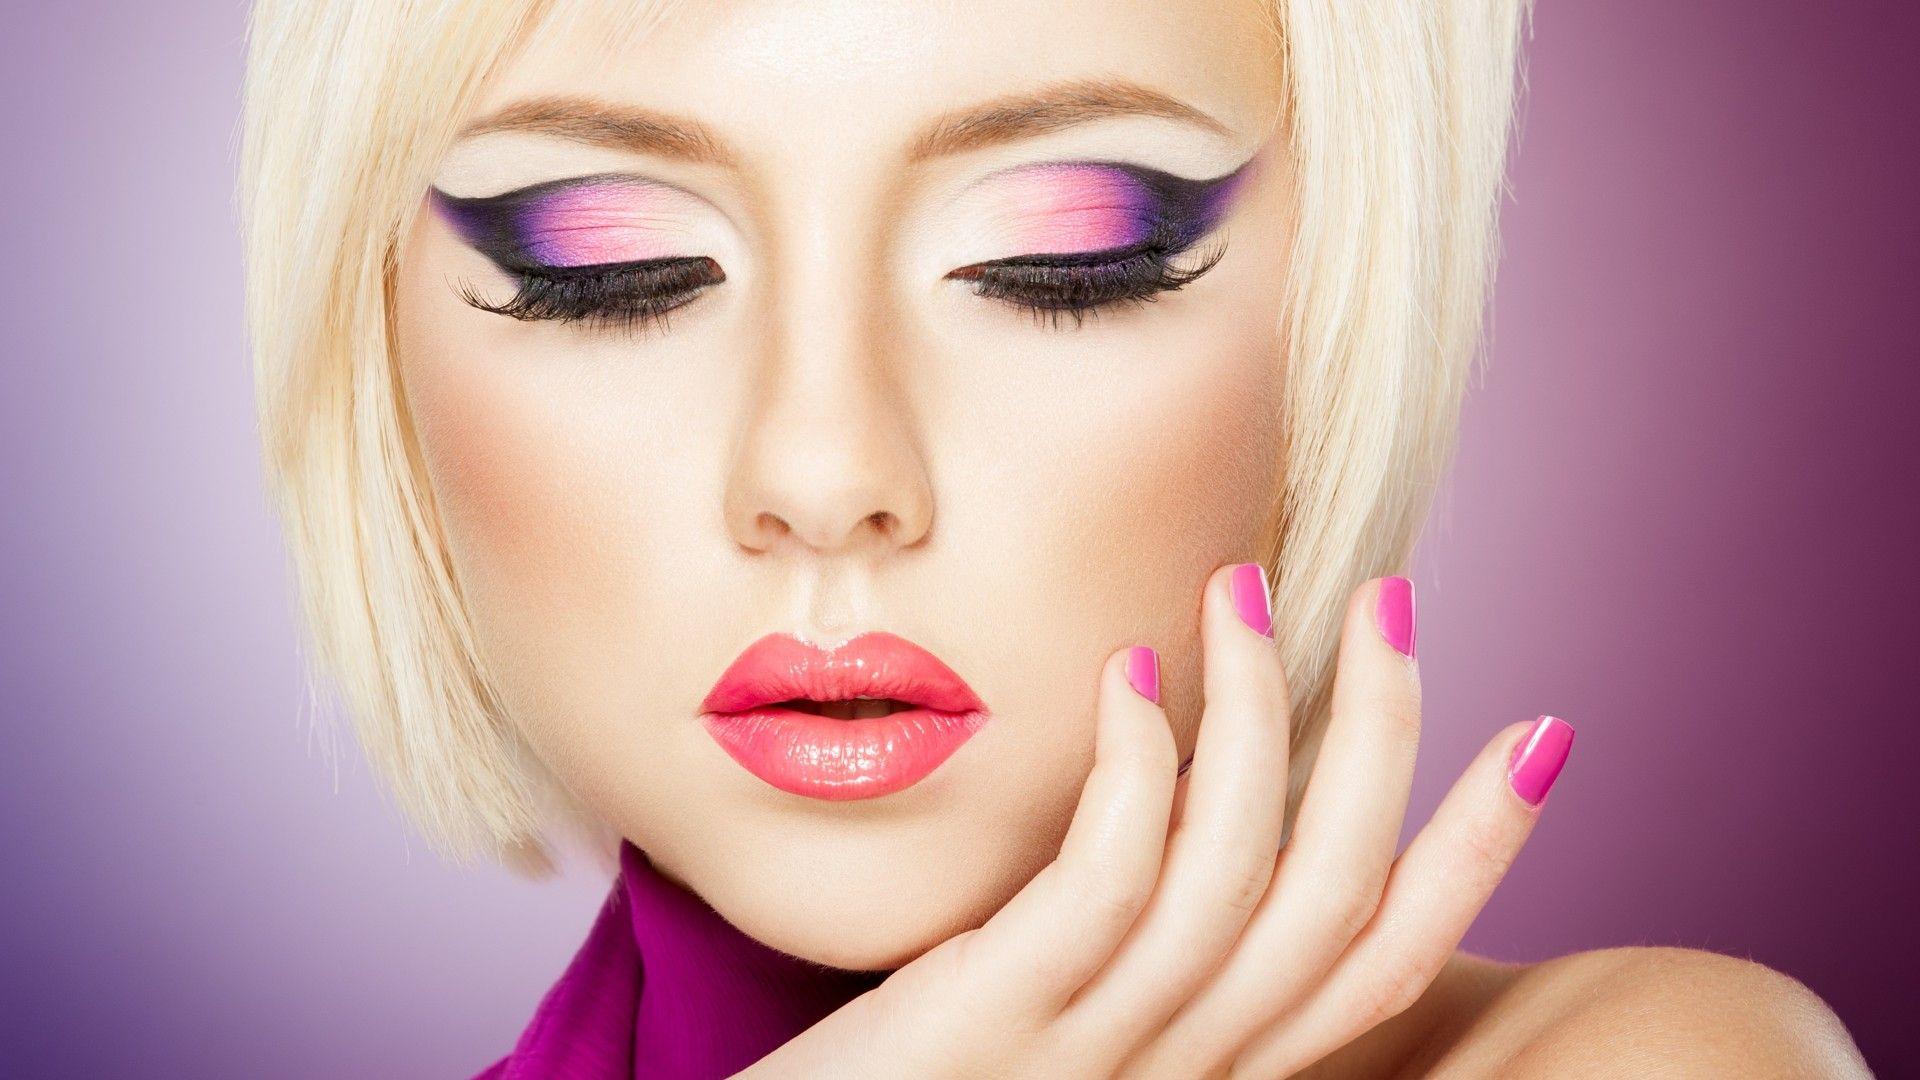 Beauty Makeup Wallpapers Top Free Beauty Makeup Backgrounds